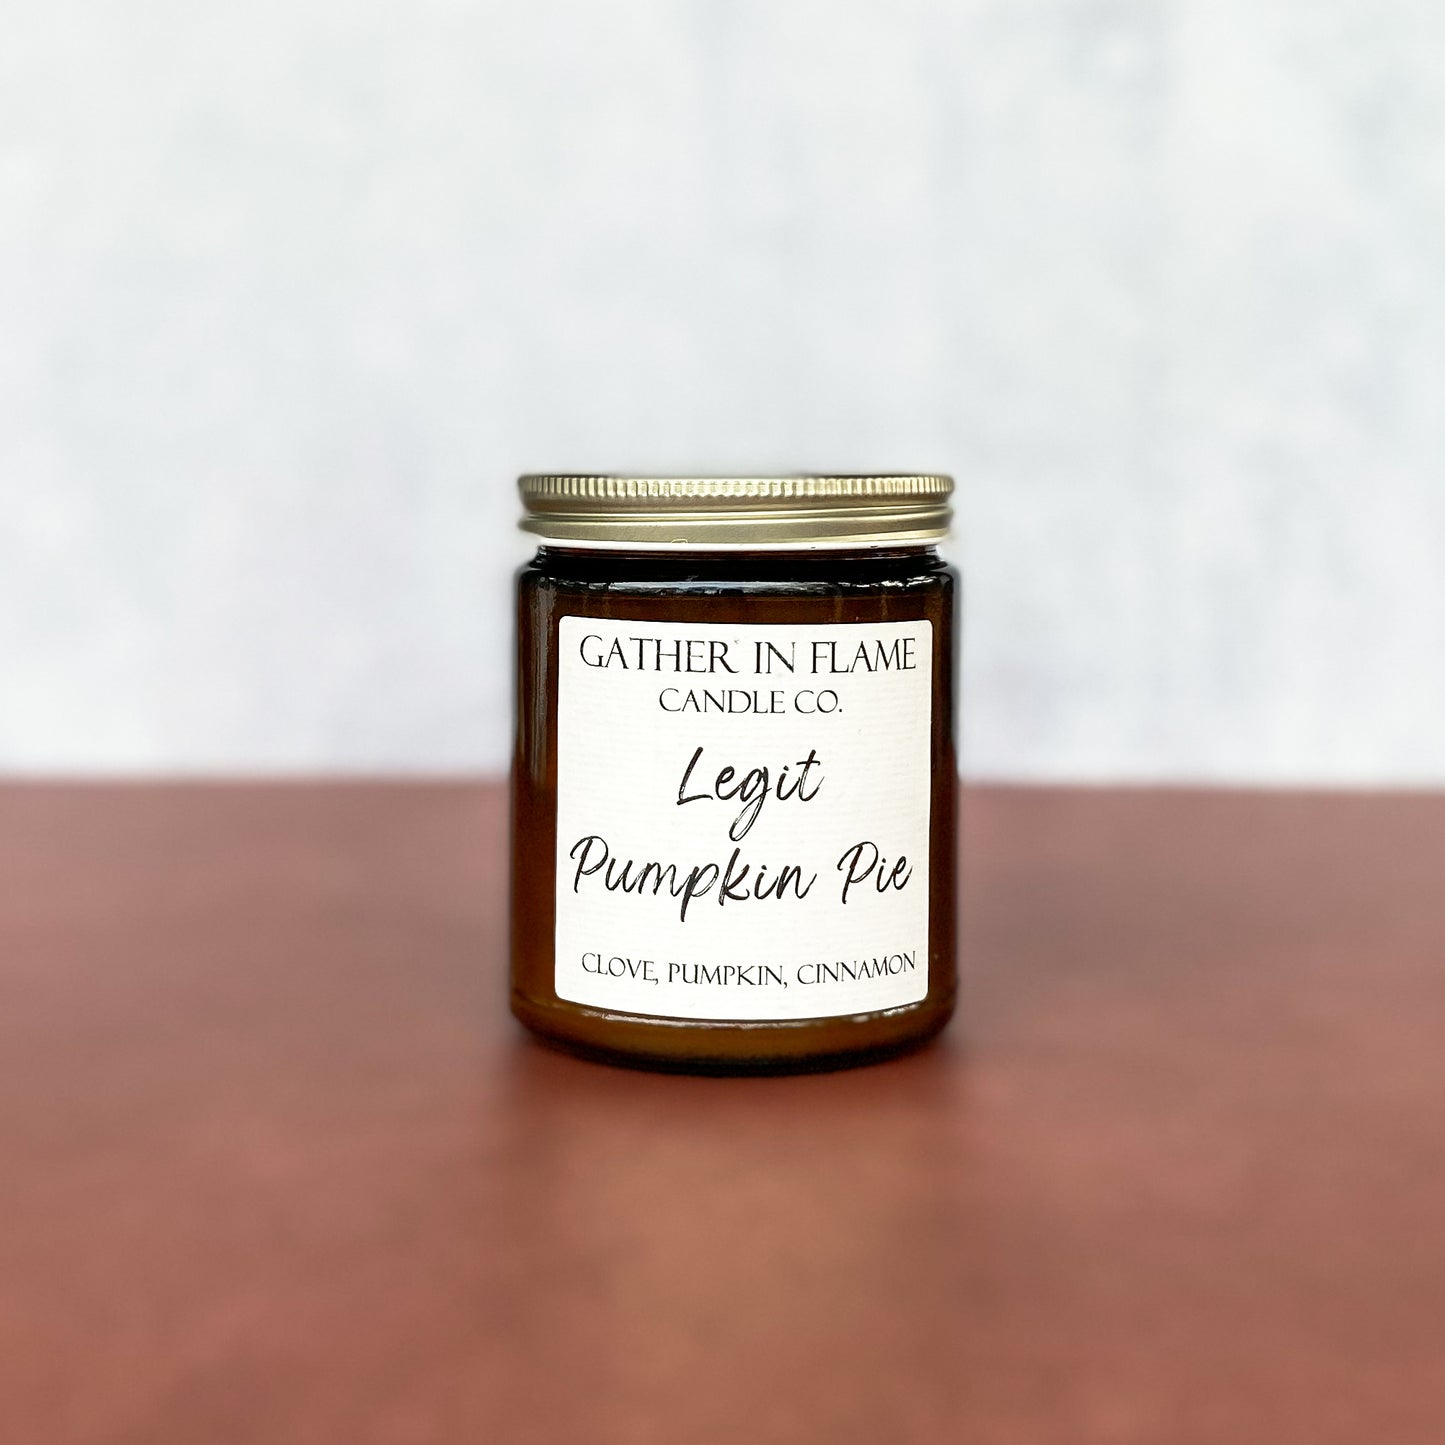 Legit Pumpkin Pie ©️ Candle